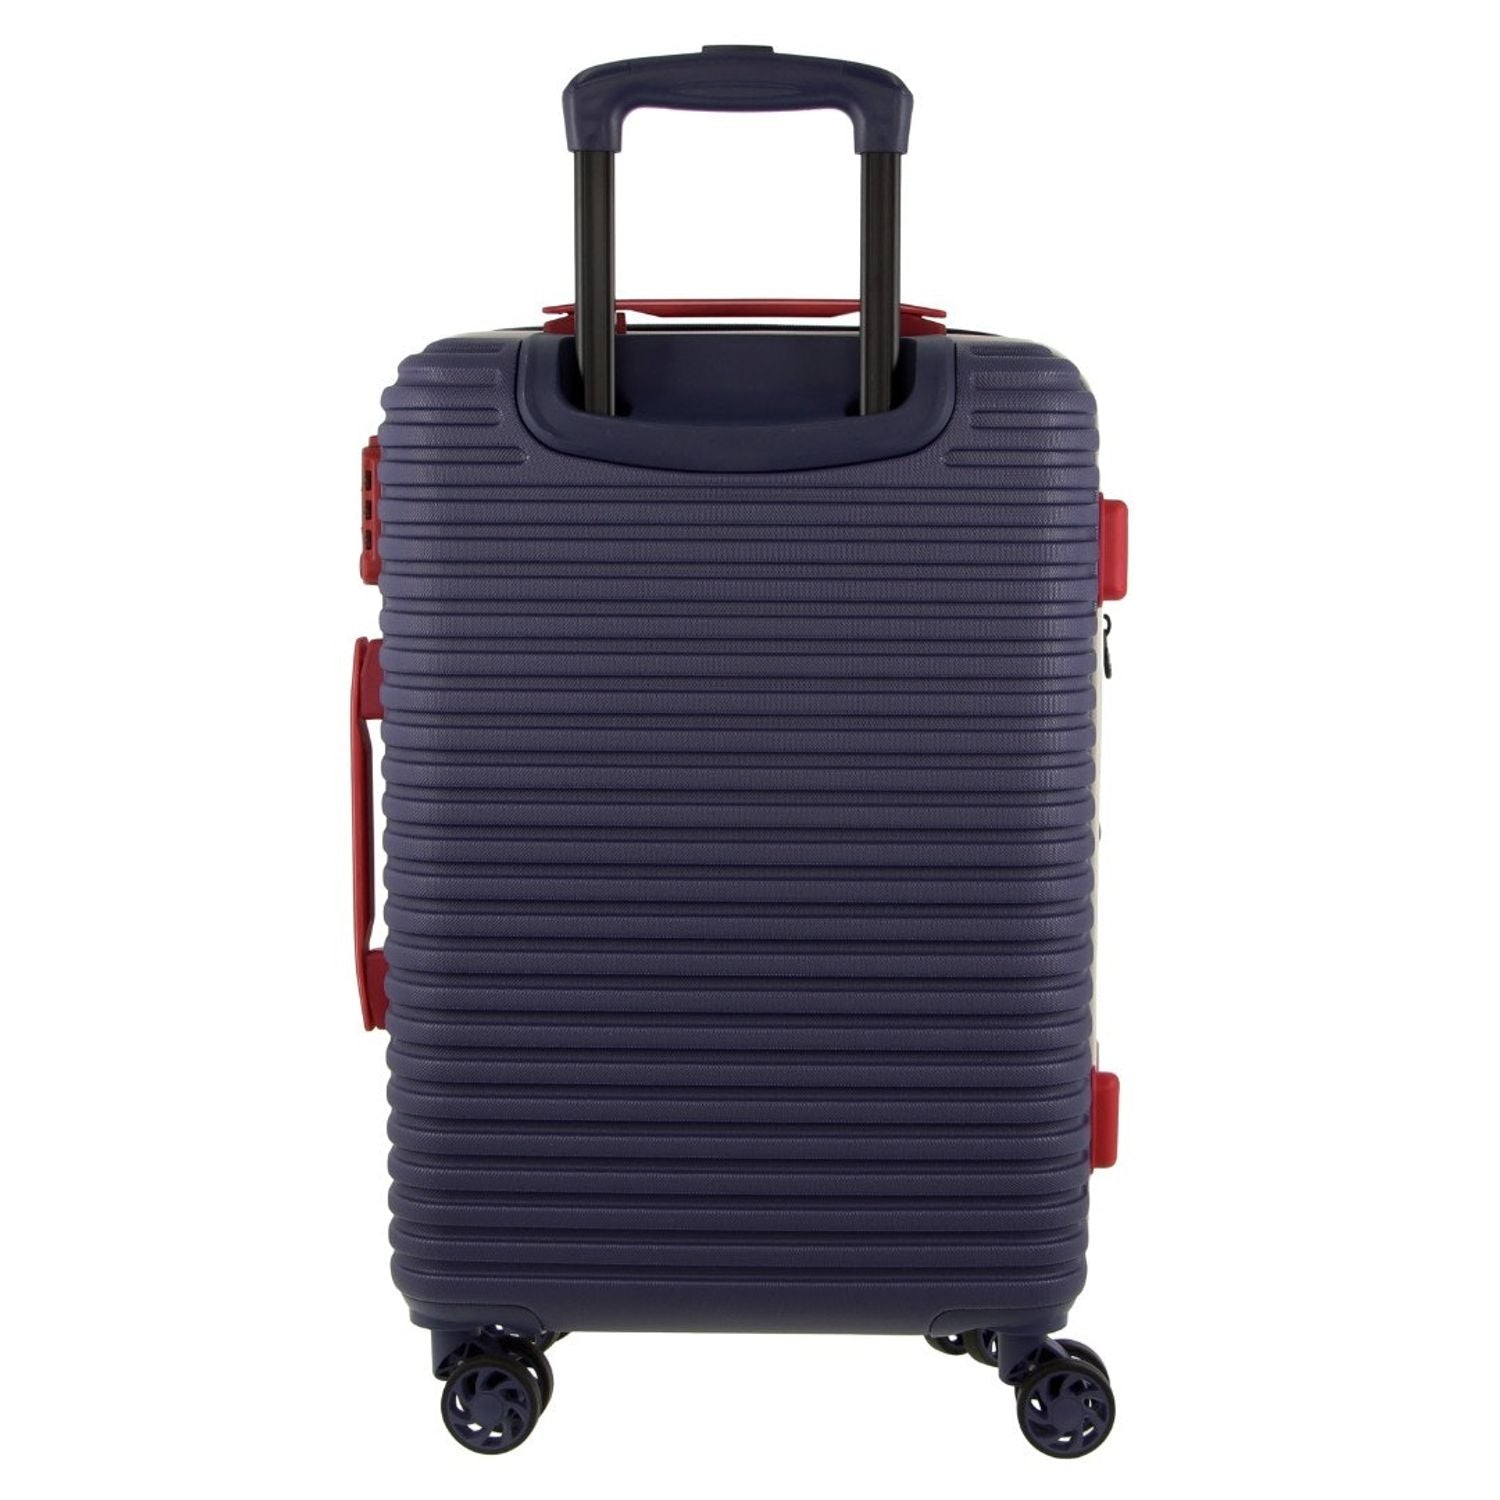 GAP 4 Wheel Hardcase Suitcase - Medium Navy